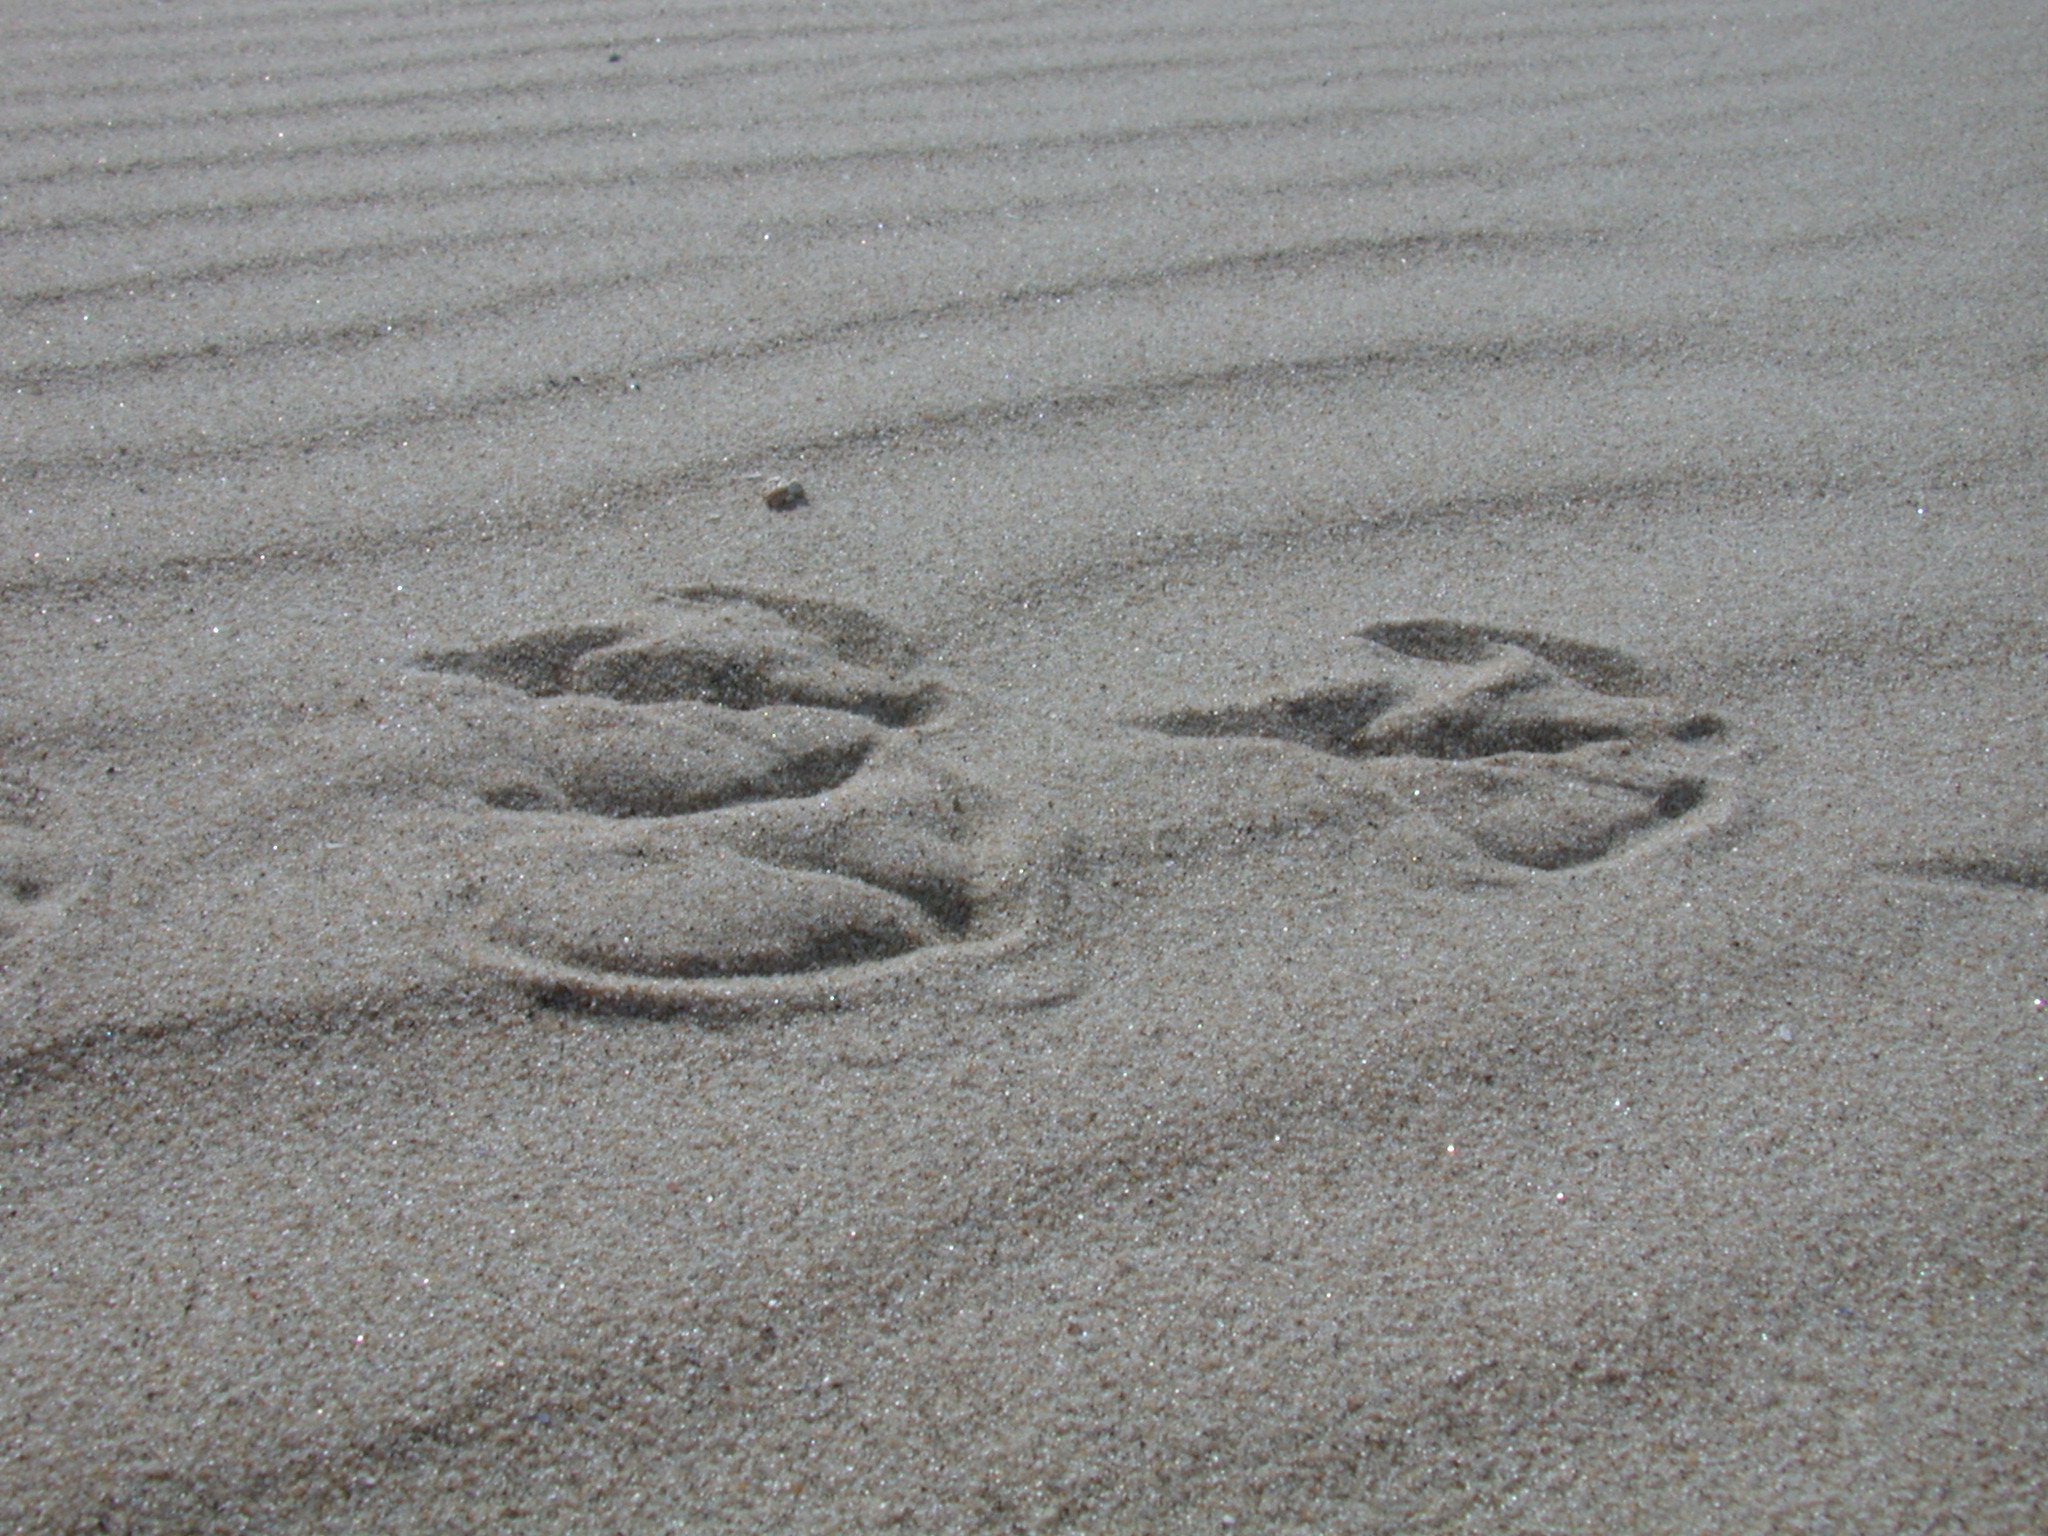 animal track tracks in the sand footprint footprints bird wading